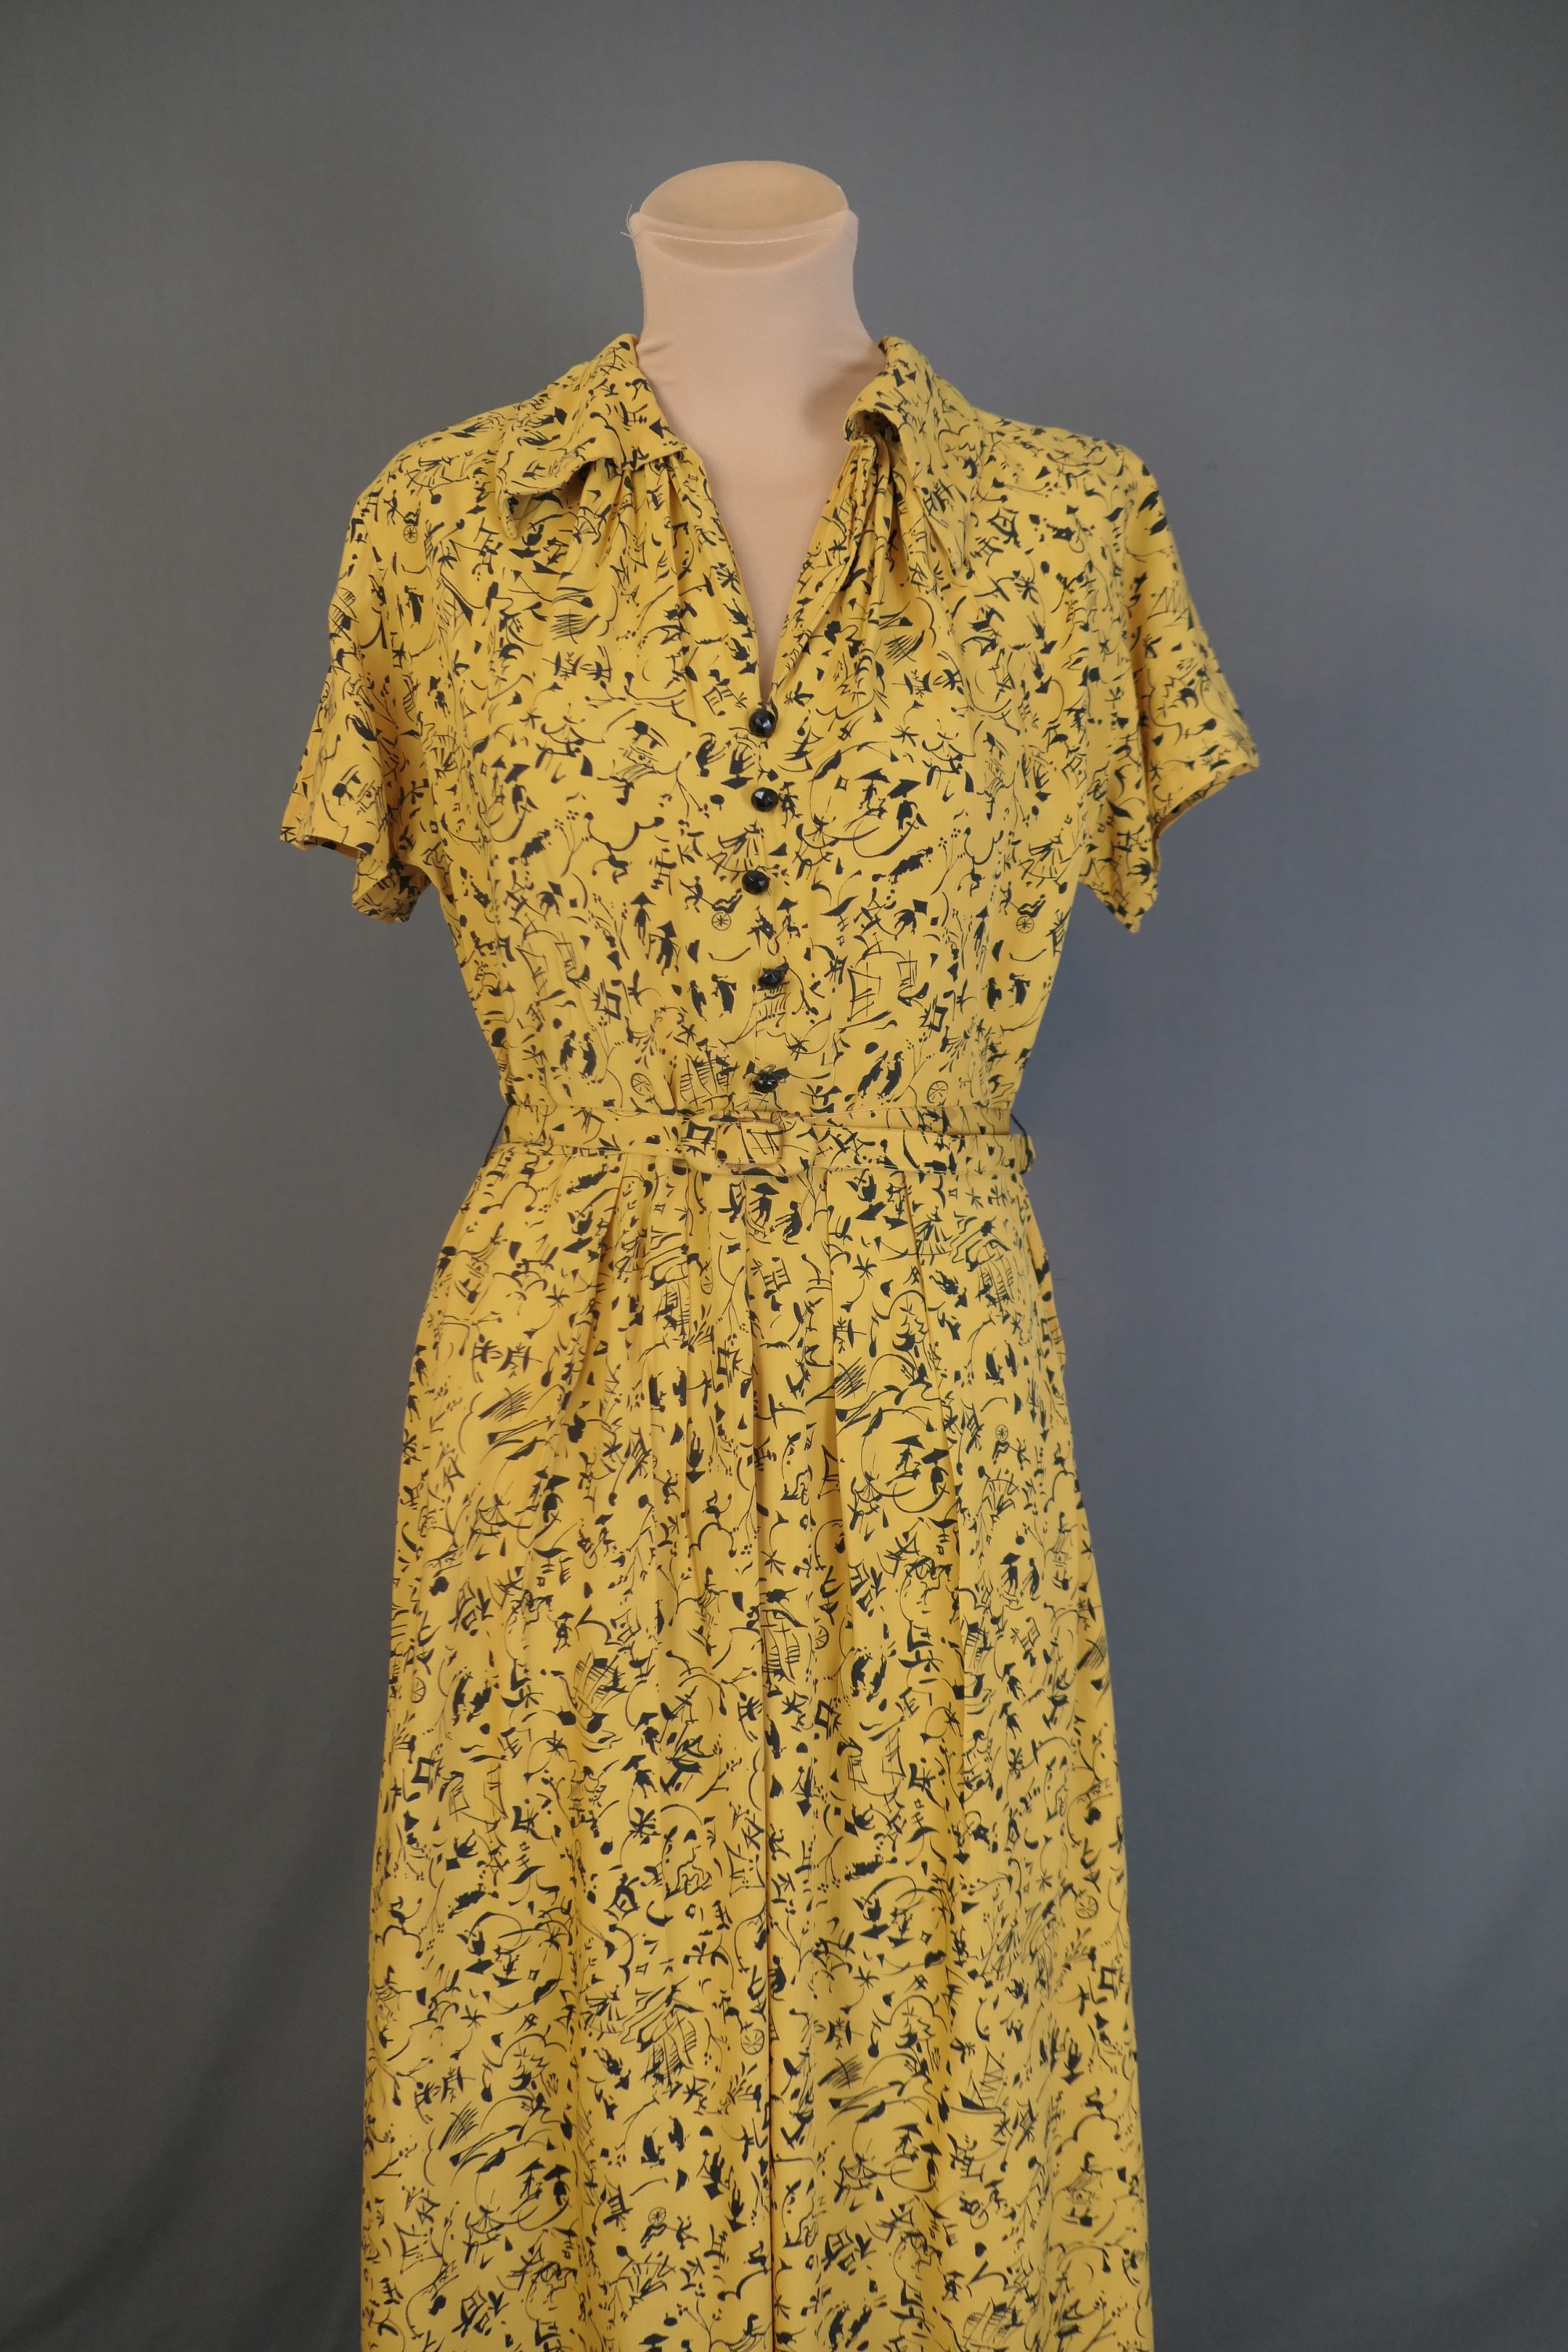 Vintage 1940s Yellow & Black Dress, Rayon Novelty Asian Print, 36